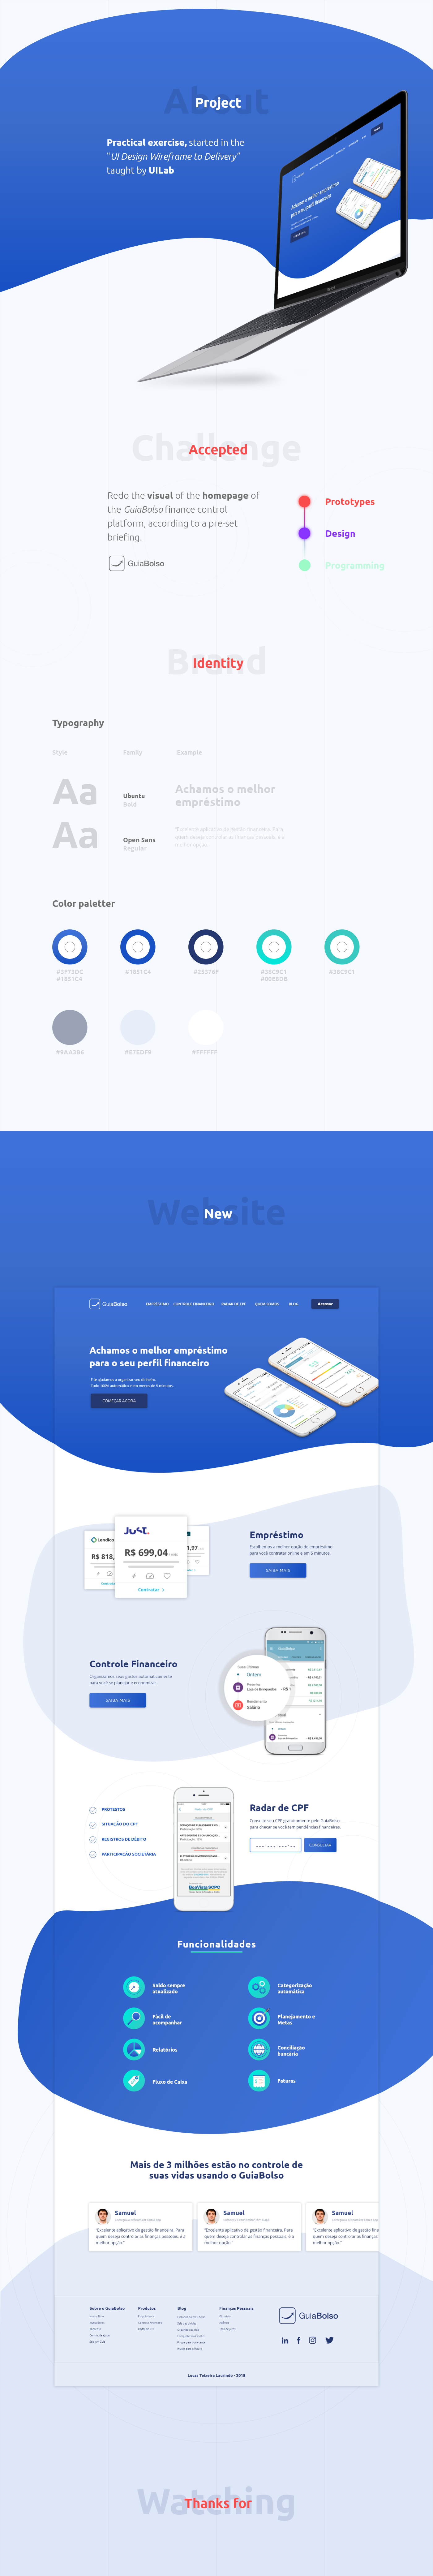 guiabolso site homepage finance redesign